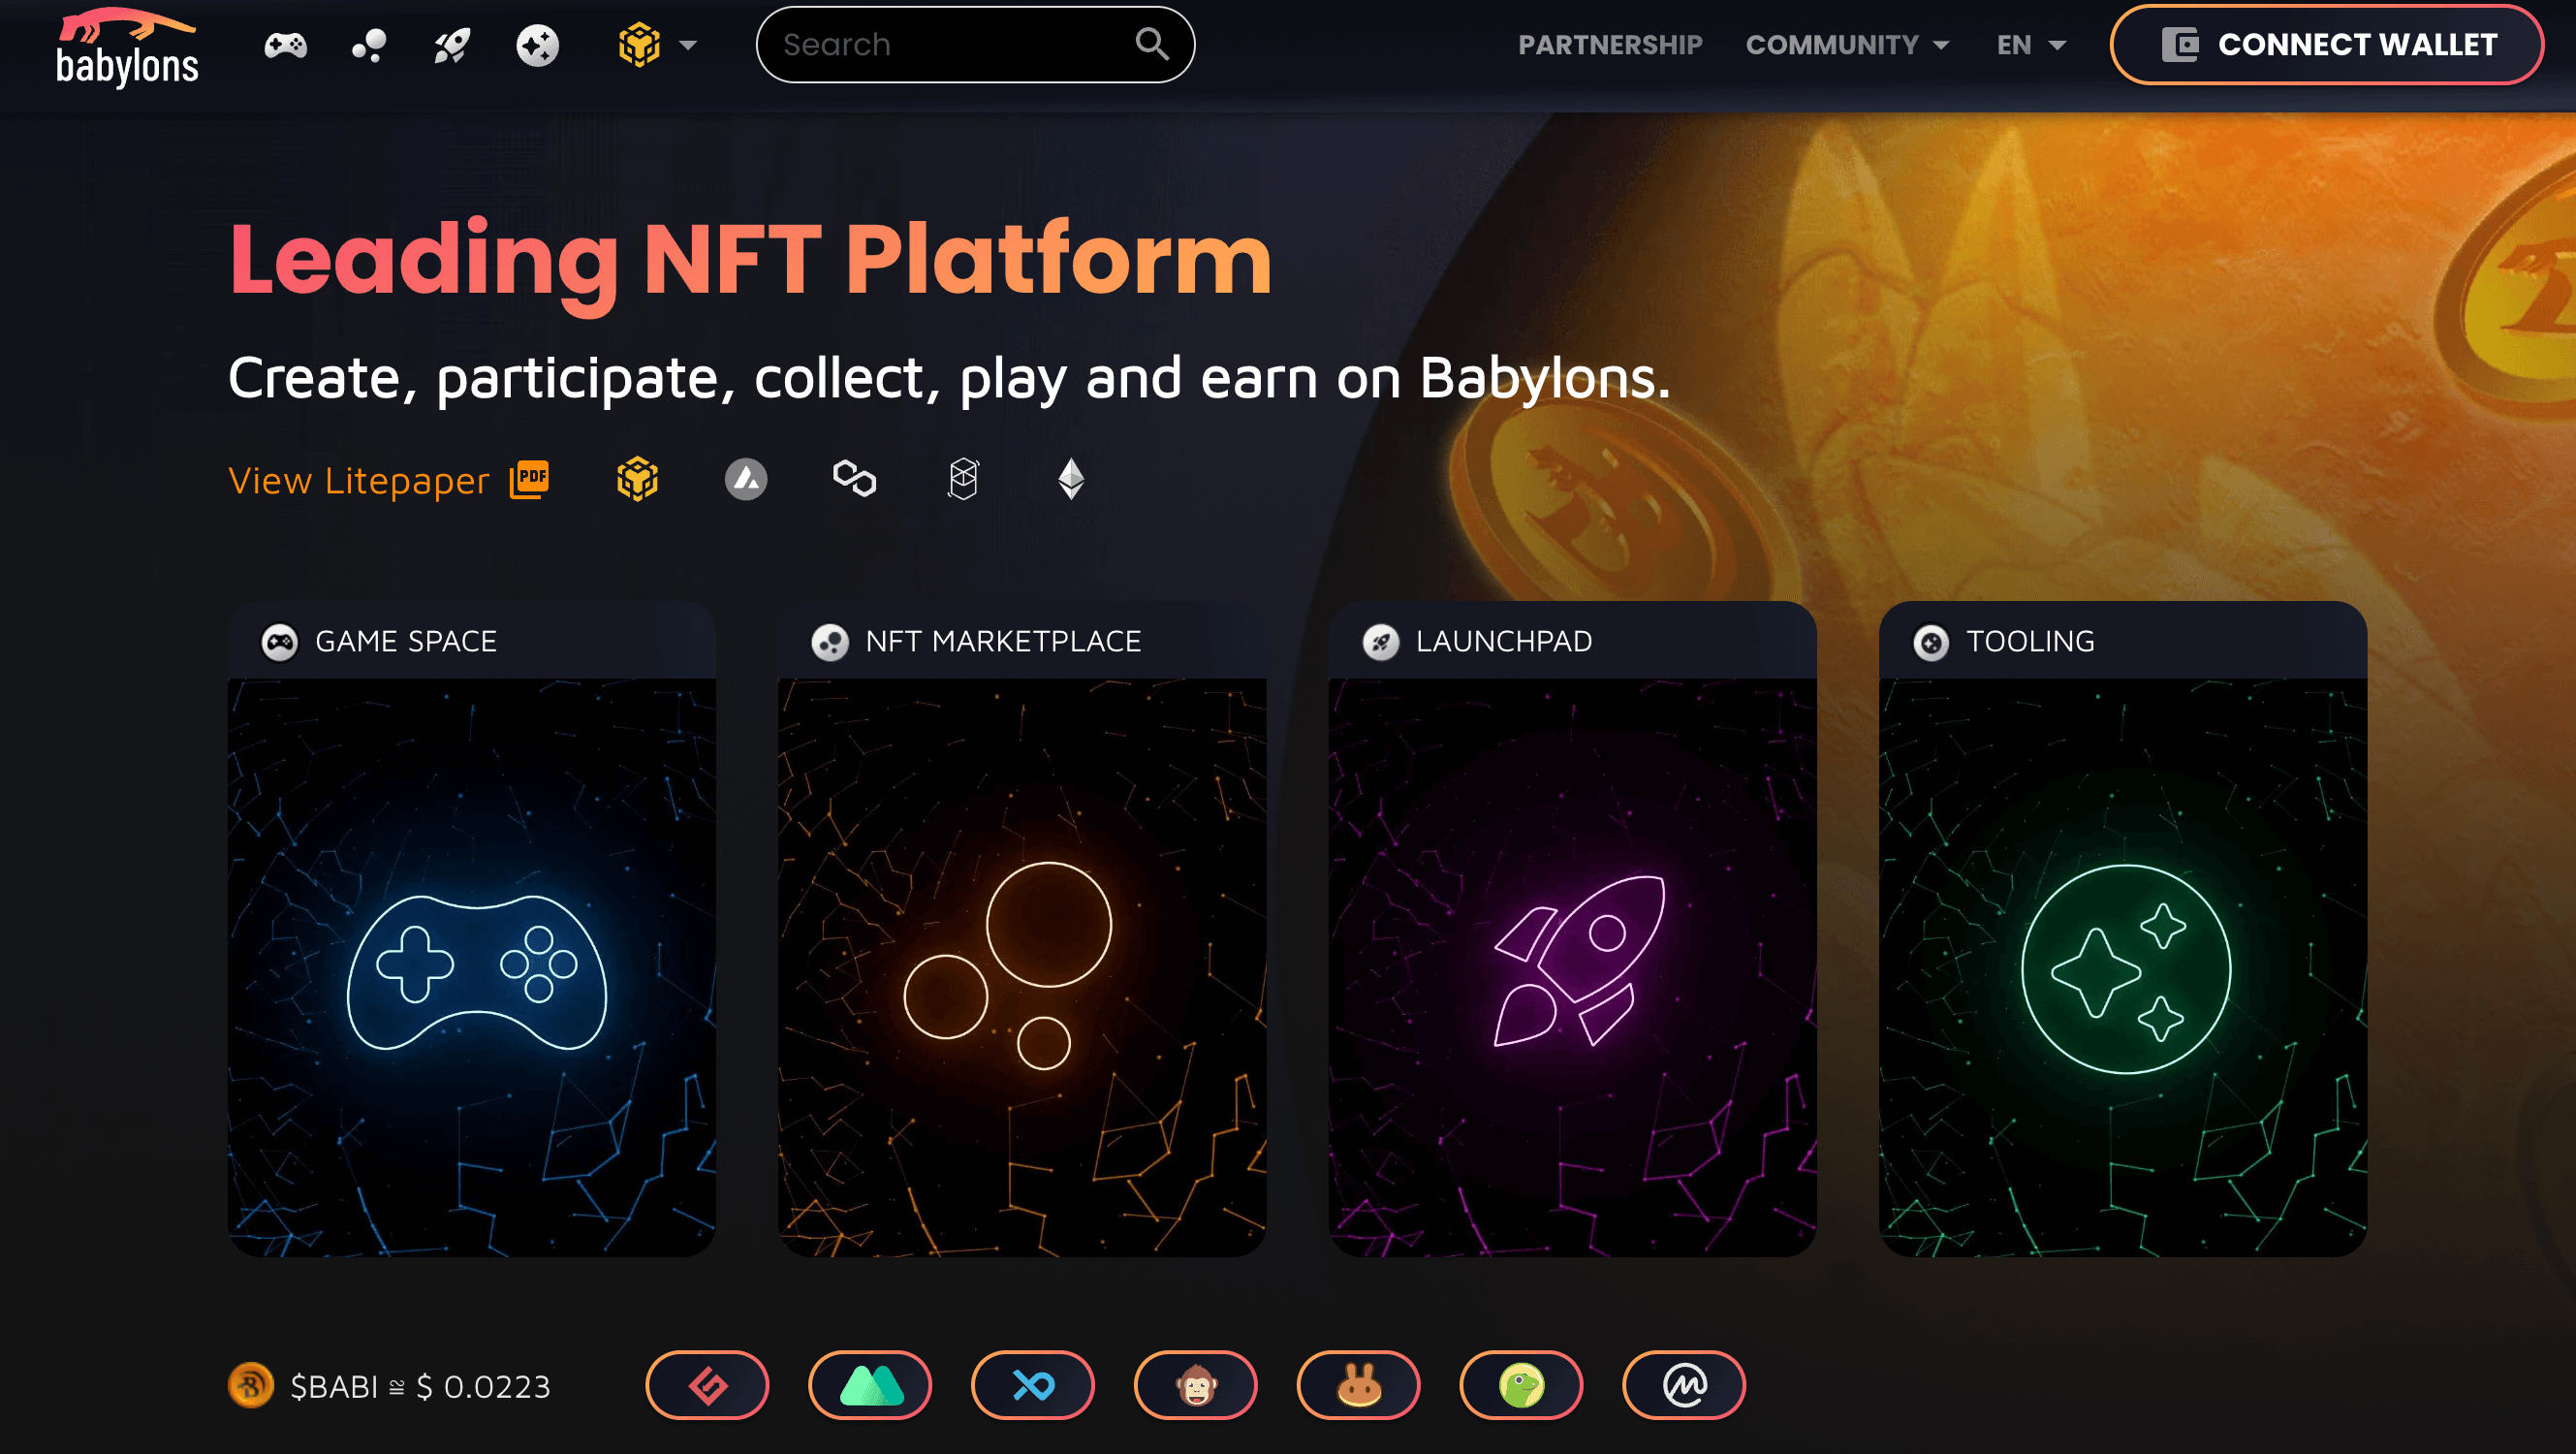 Babylons NFT Platform & Launchpad cover